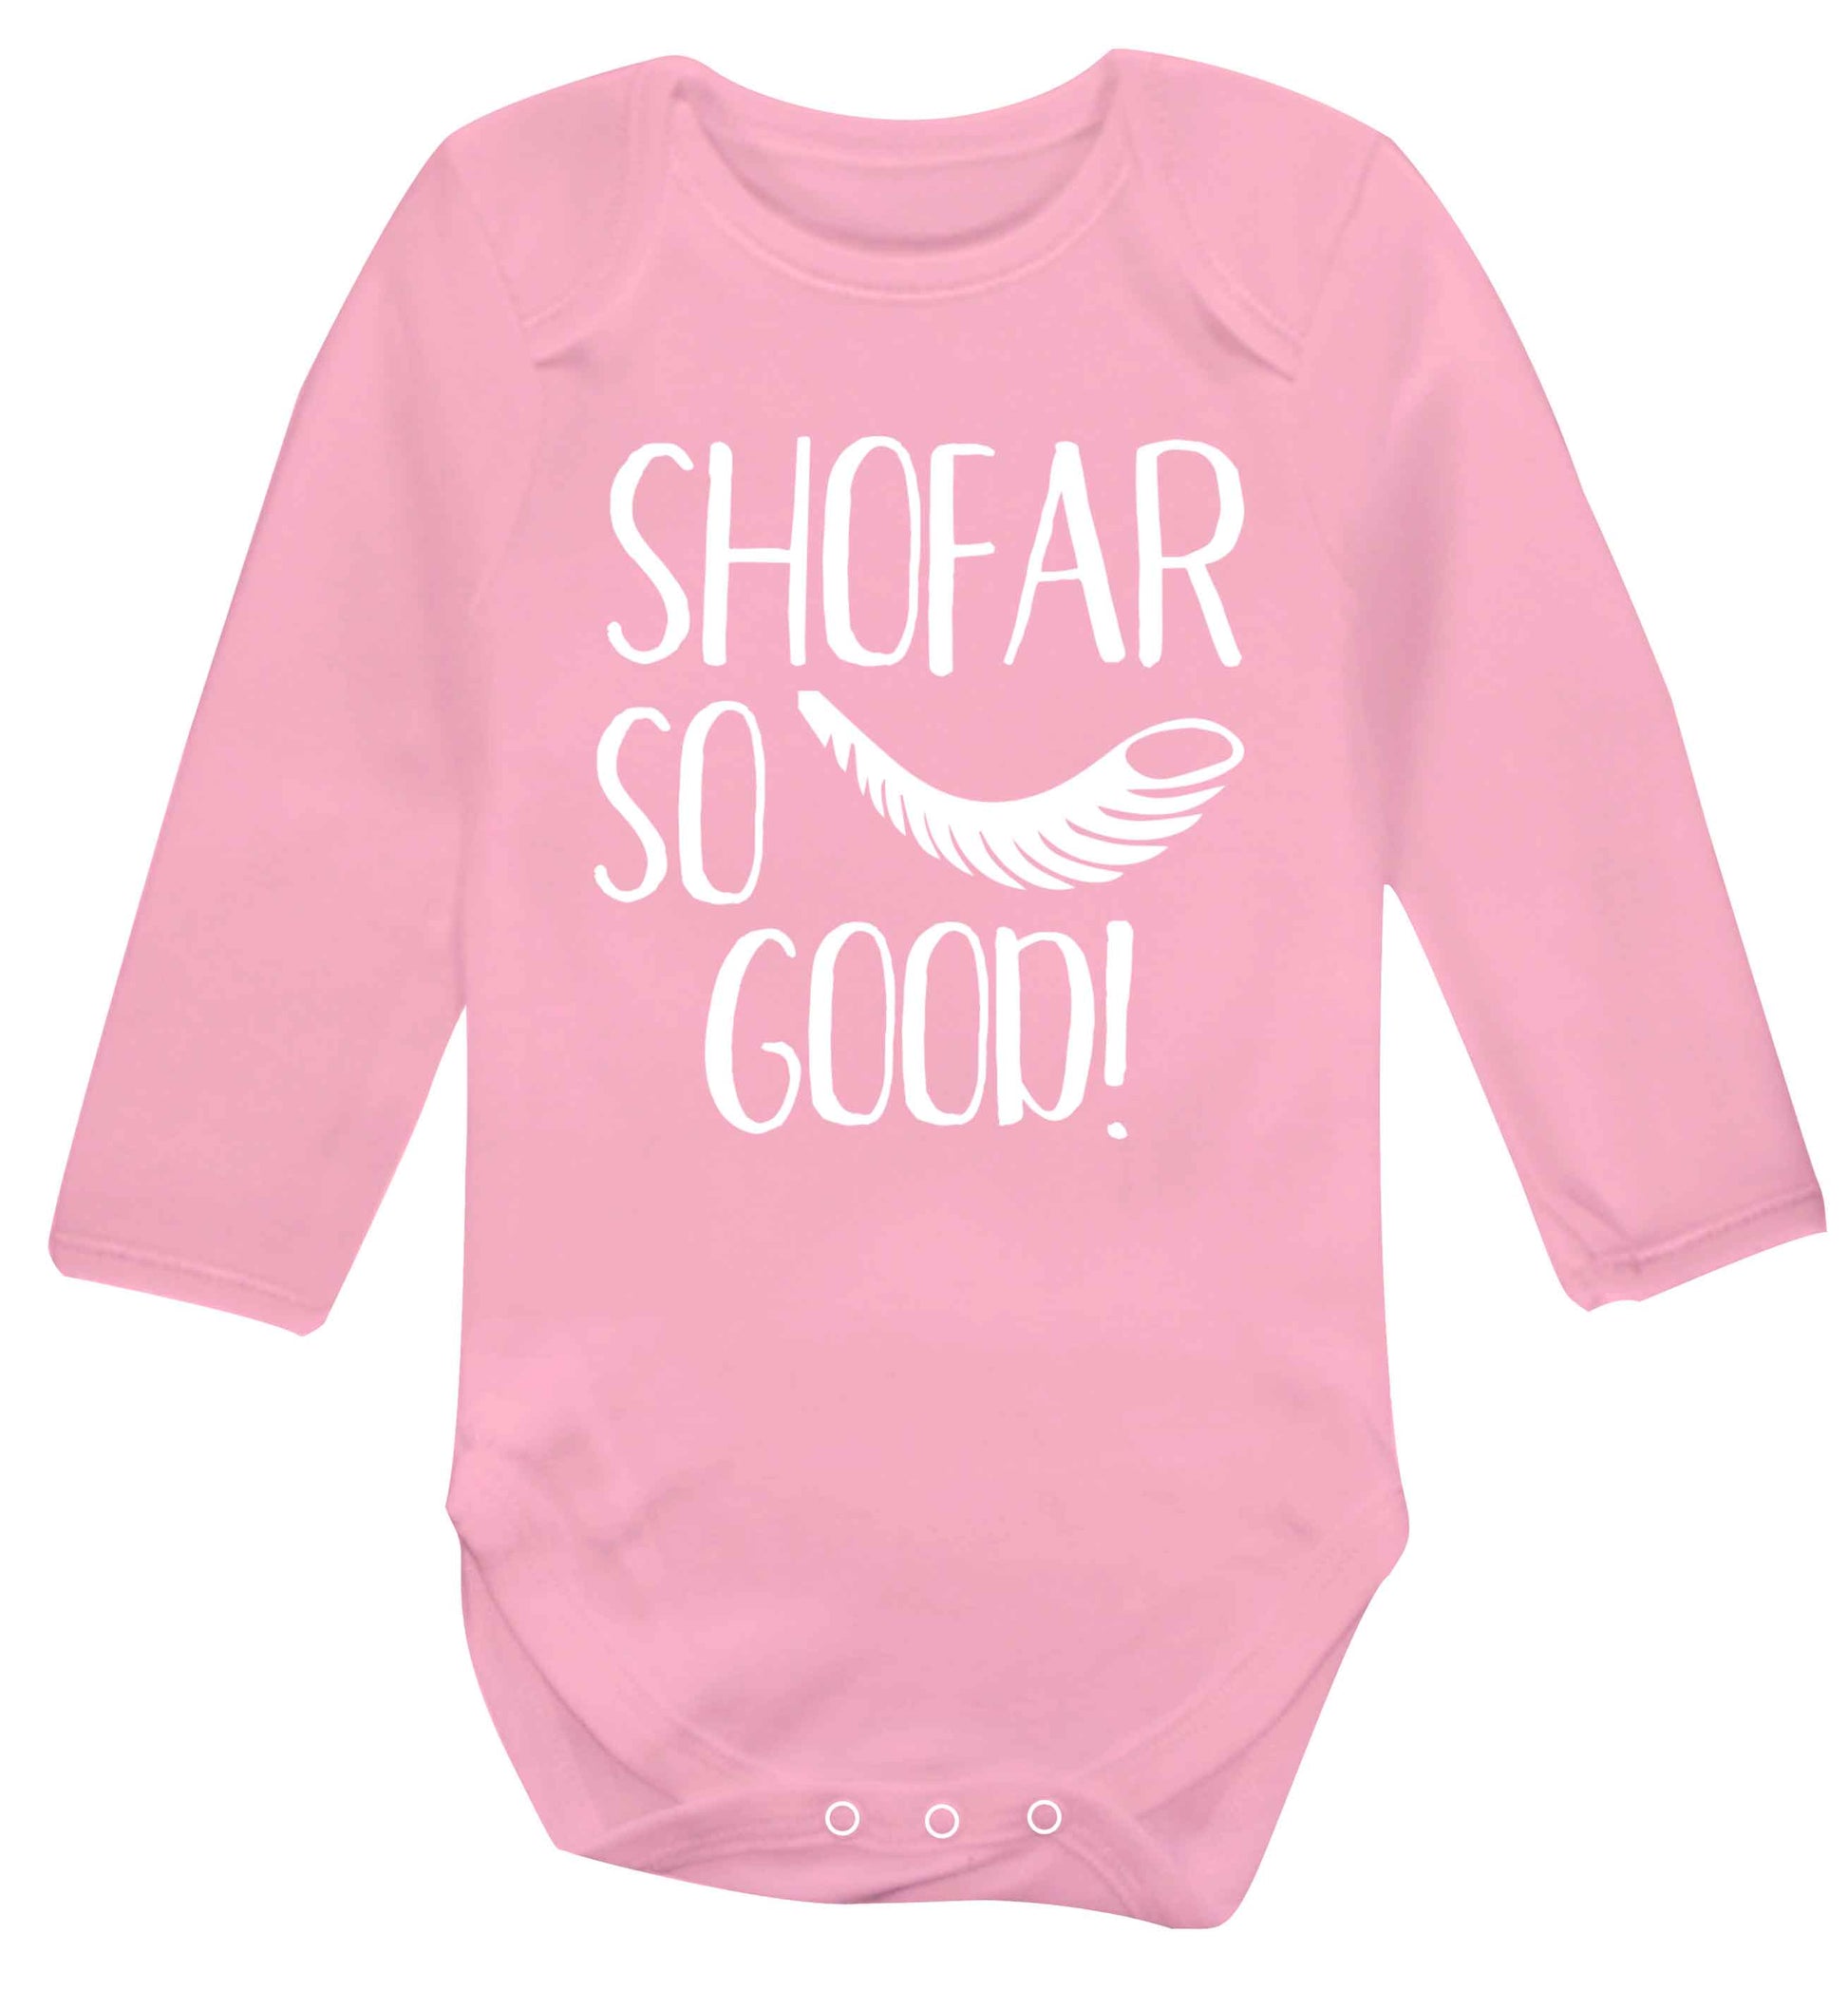 Shofar so good! Baby Vest long sleeved pale pink 6-12 months